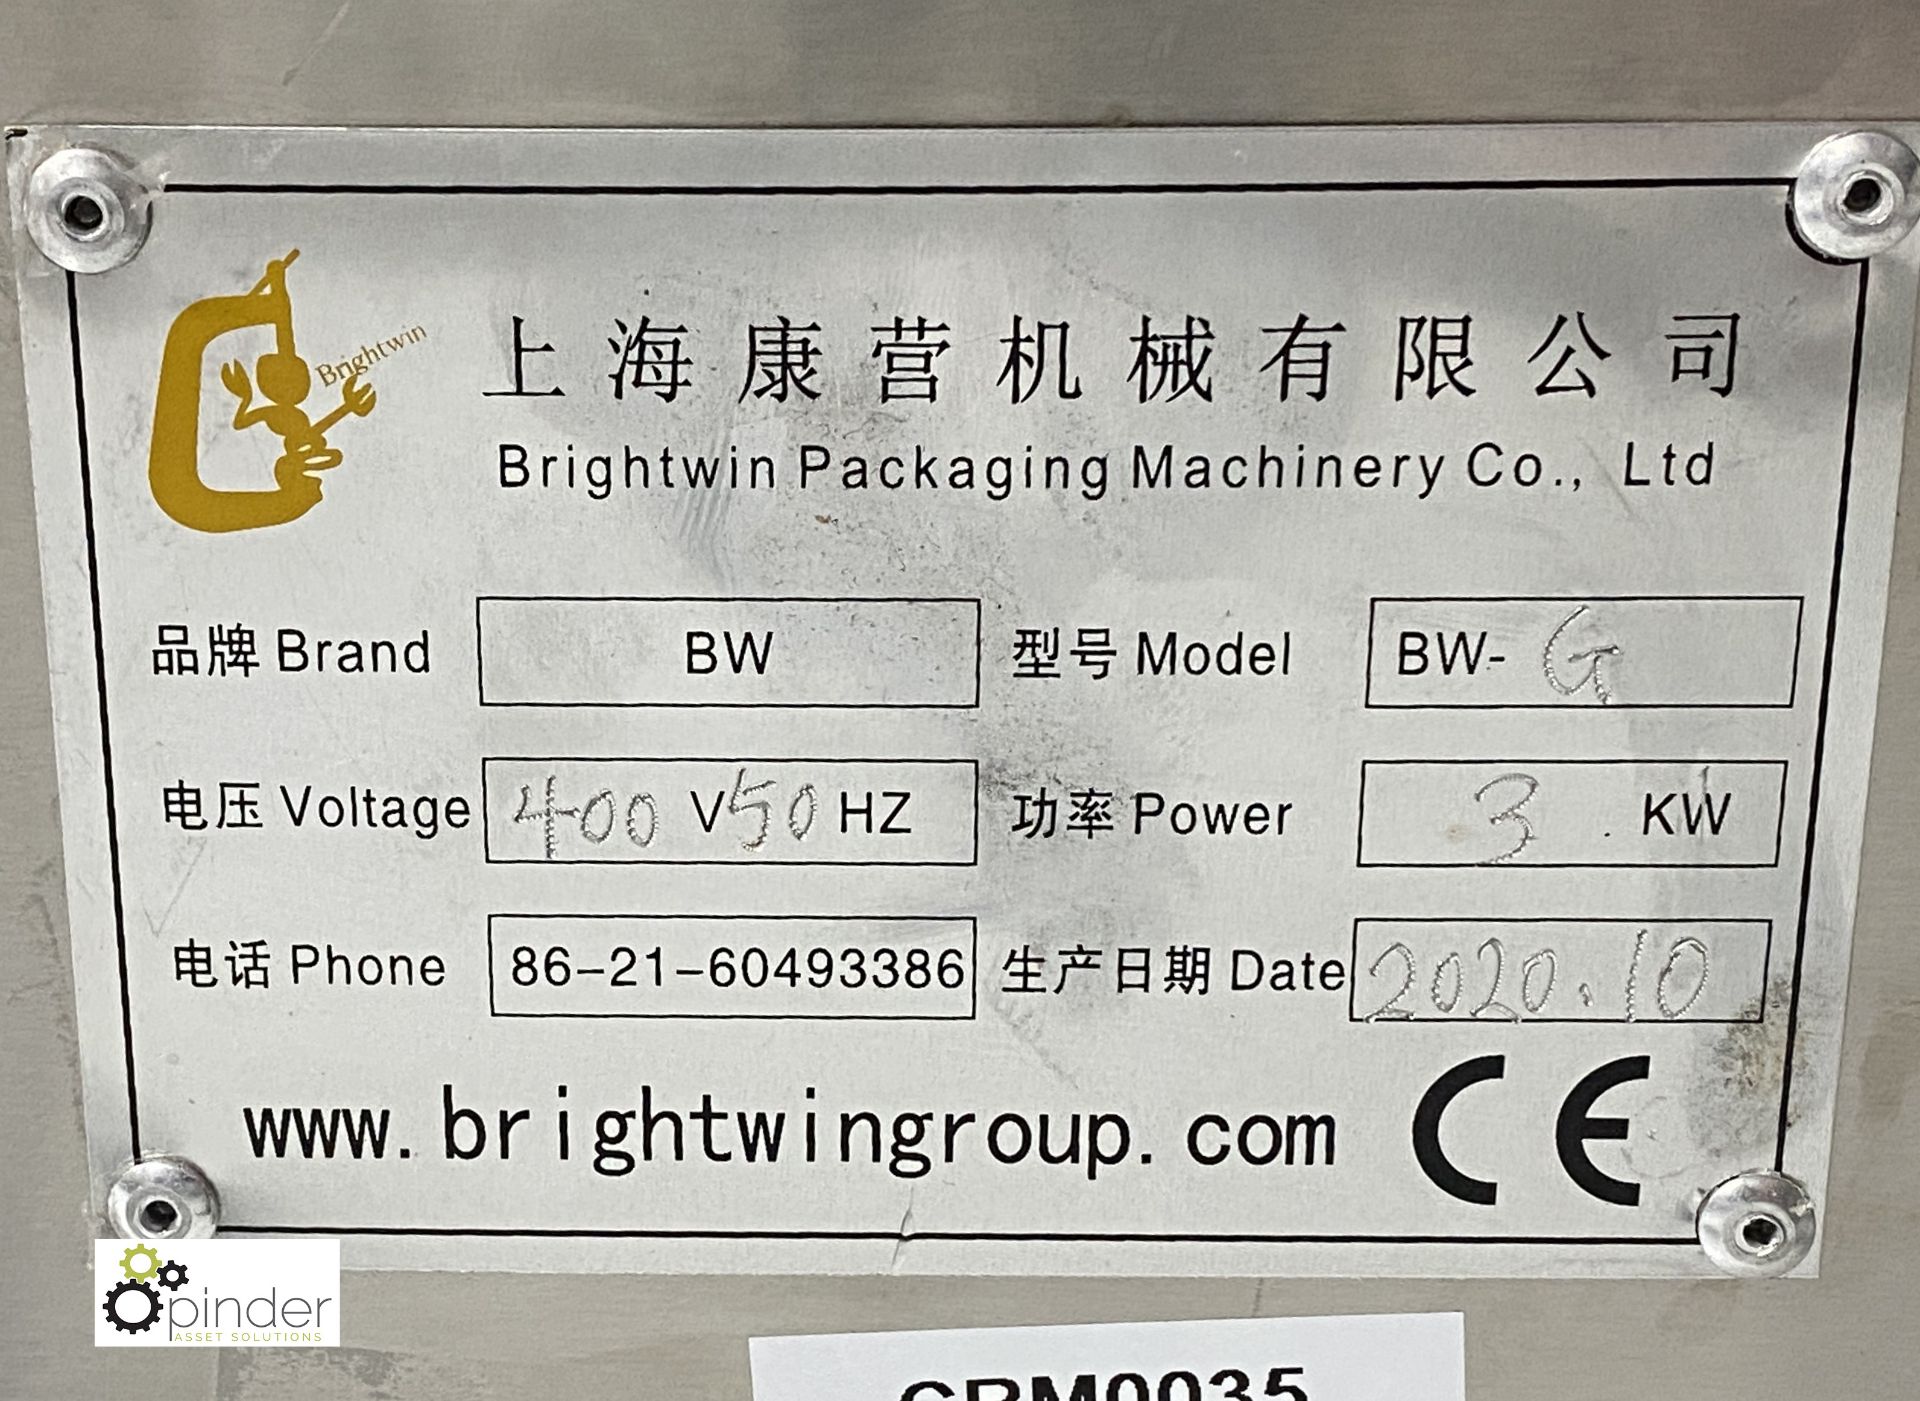 Brightwin Packaging Machinery Co Ltd BW-G 24-station Test/Vape Tube Filling Machine, capacity 3200 - Image 3 of 14